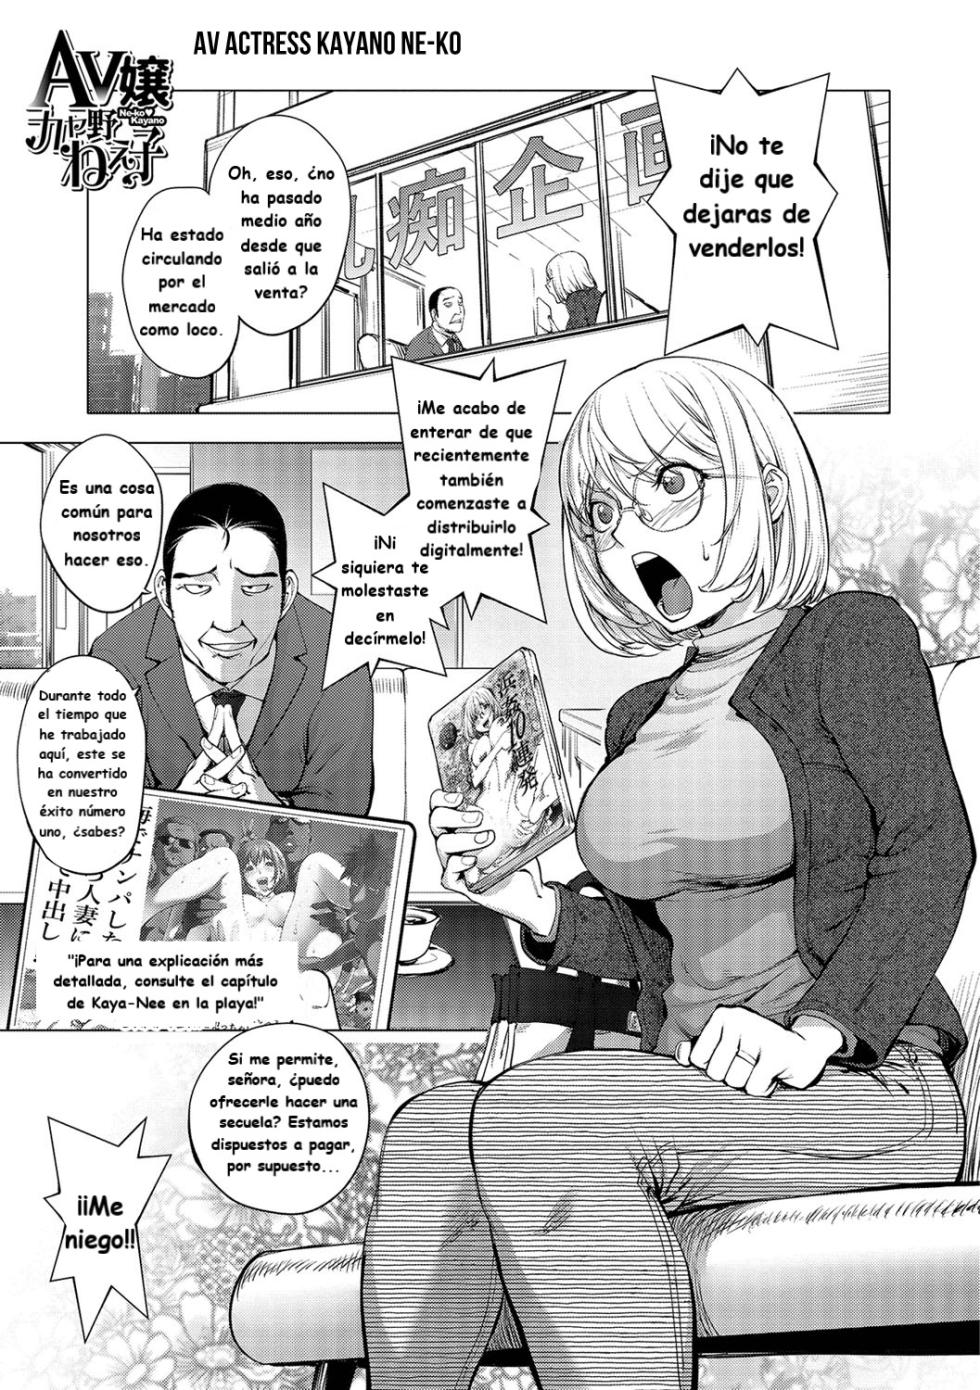 Kayano Neeko AV 1 y 2 sin censura. (Kon Kit) (Spanish) - Page 1